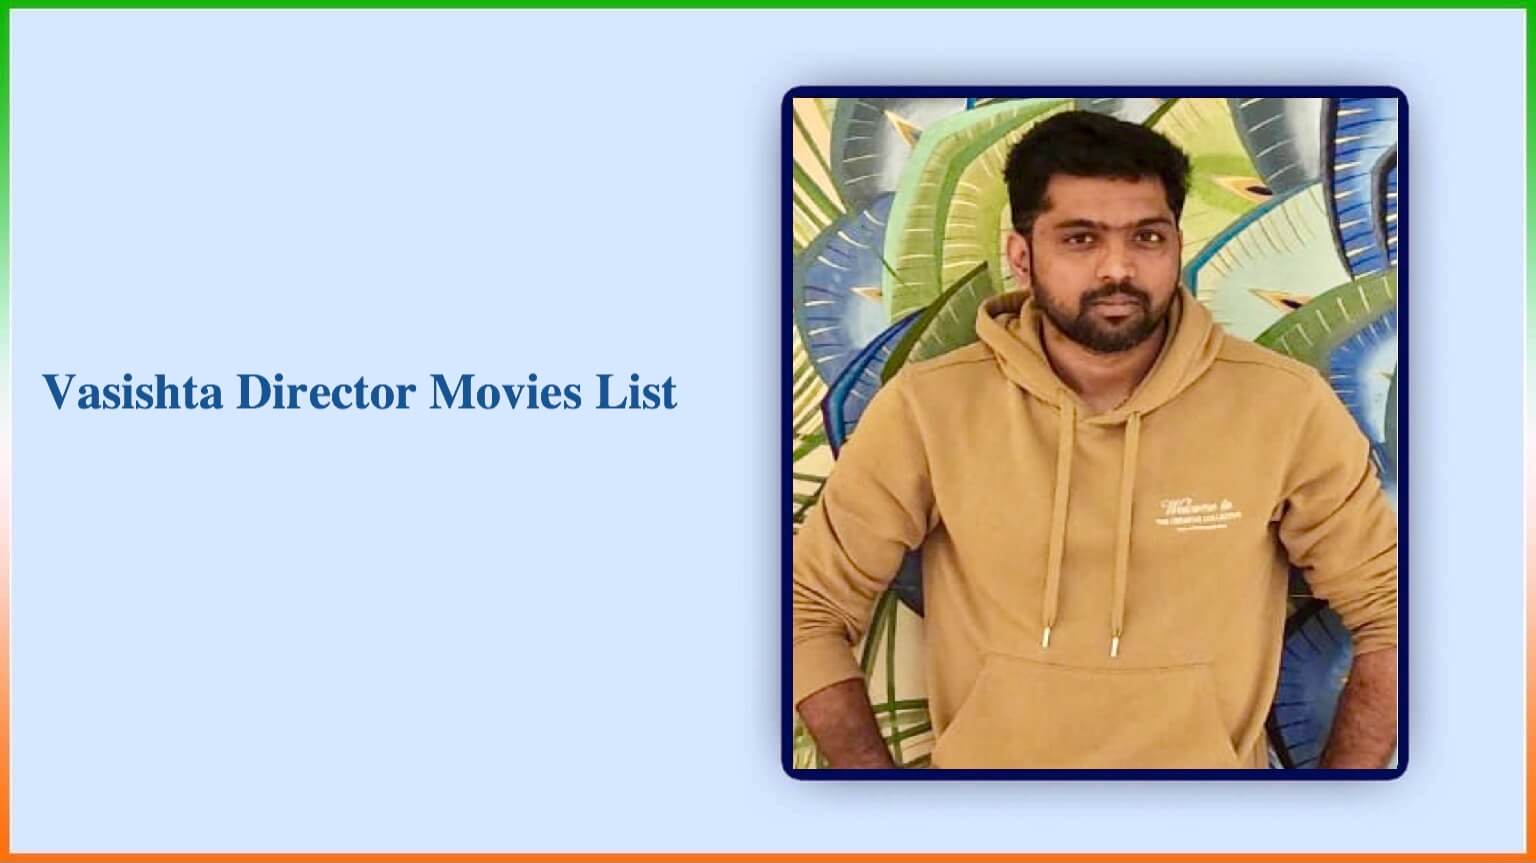 Vasishta Director Movies List